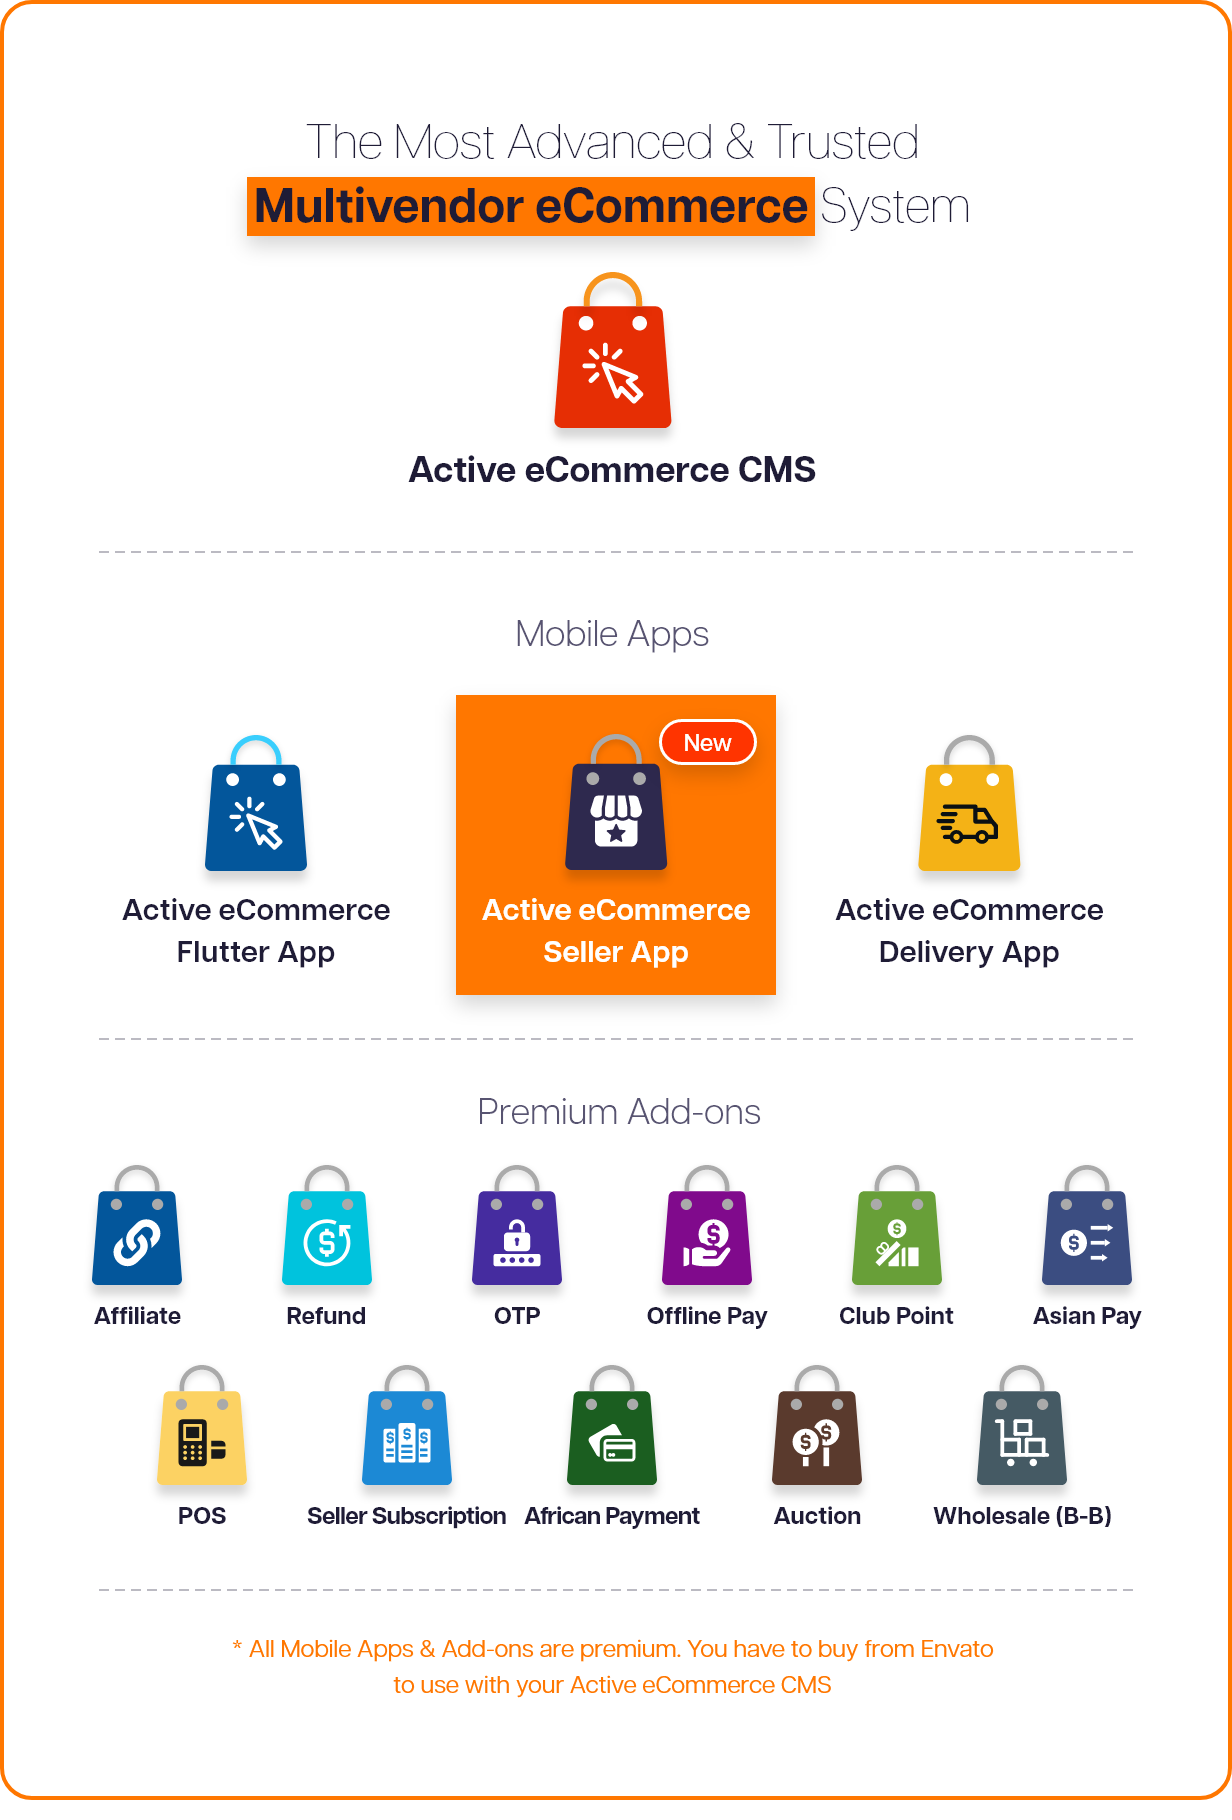 Active eCommerce Seller App - 2